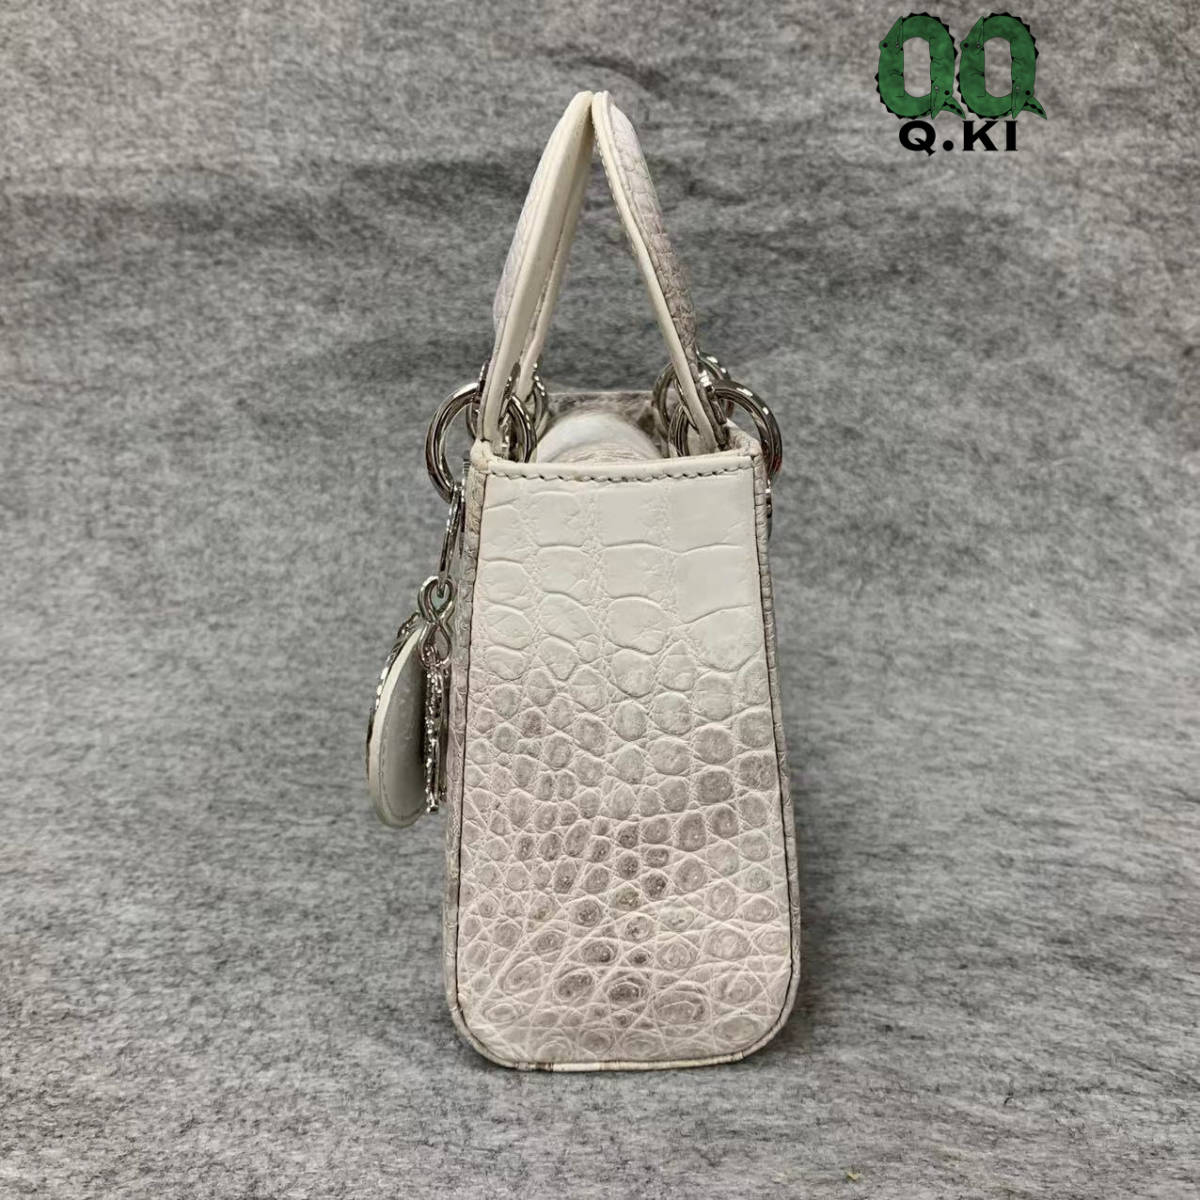 himalaya white crocodile leather wani leather genuine article . leather center taking . mat processing handbag shoulder bag beautiful color 1 point 